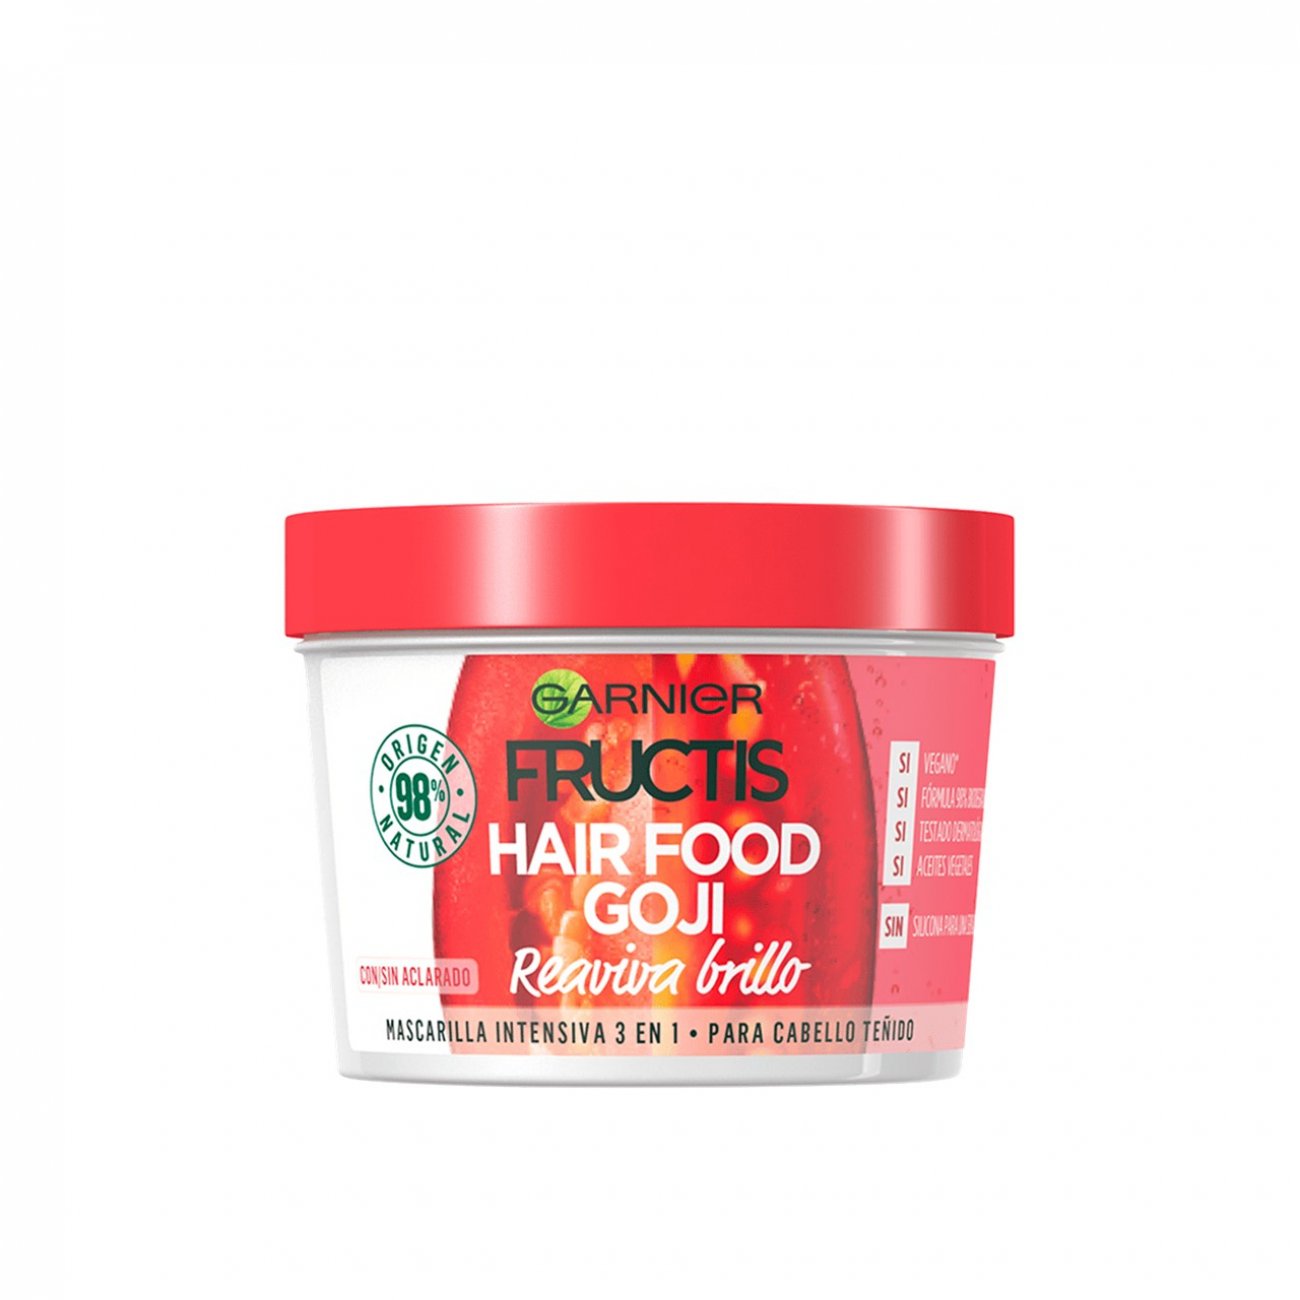 Comprar Garnier Fructis Hair Food Goji Mask 390ml · Mexico